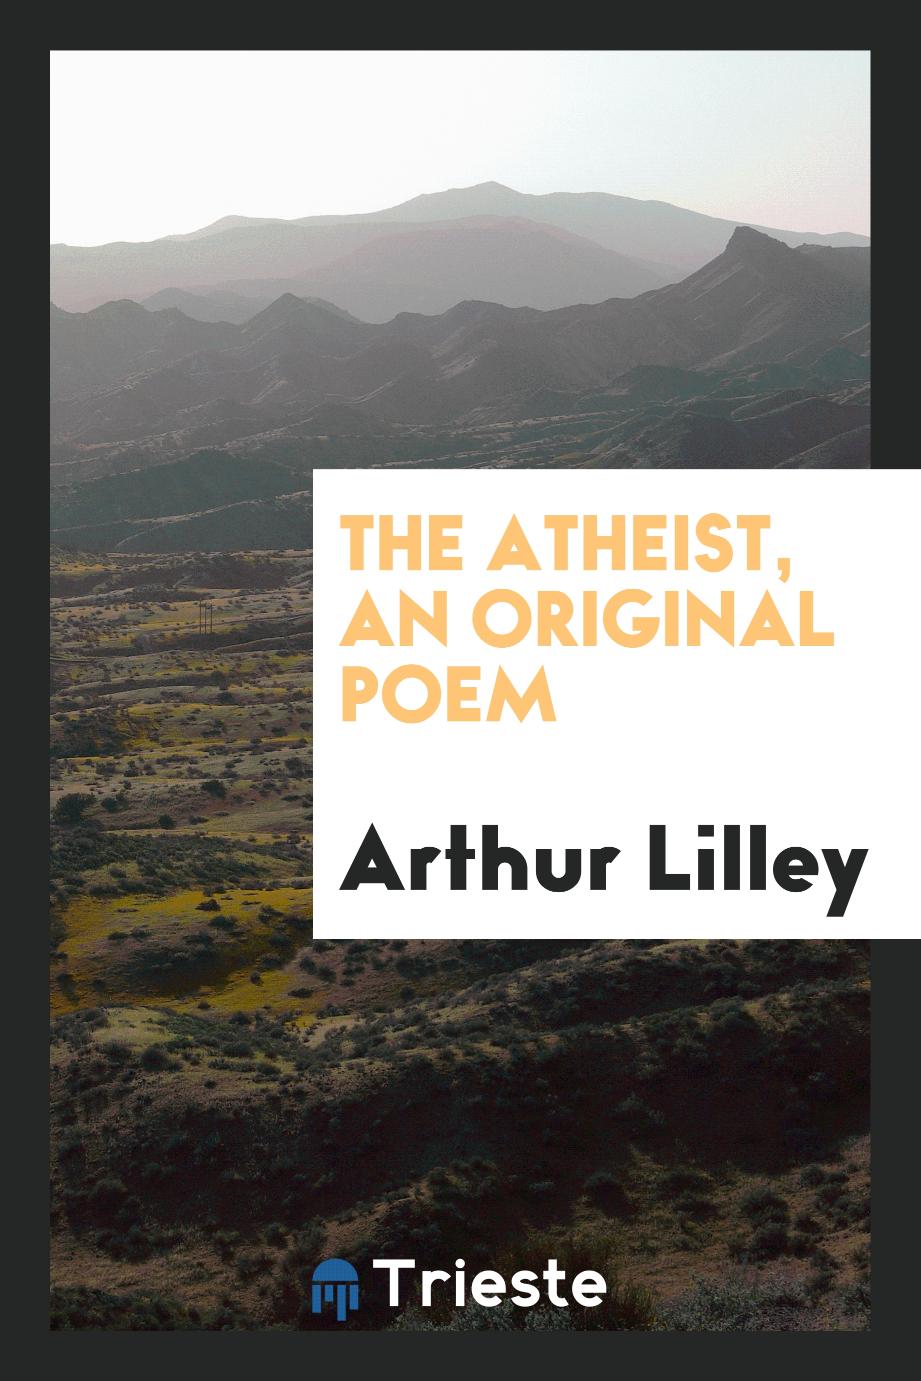 The atheist, an original poem